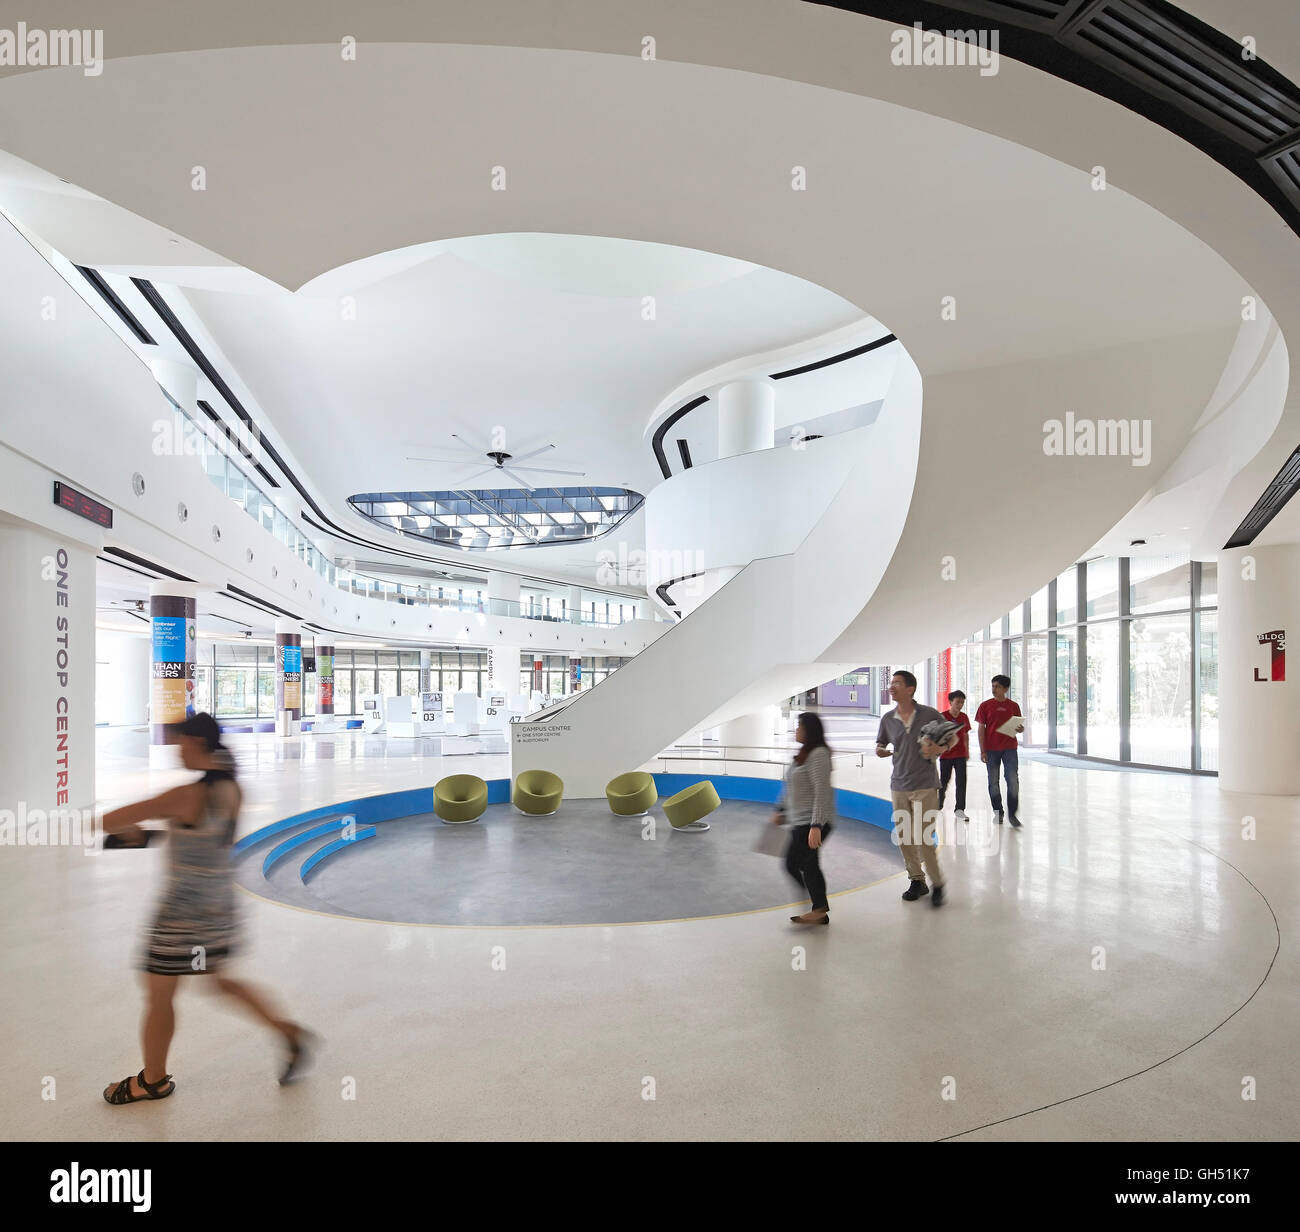 Ground floor foyer with circular staircase. Singapore University of Technology and Design, Singapore, Singapore. Architect: UNStudio, 2015. Stock Photo